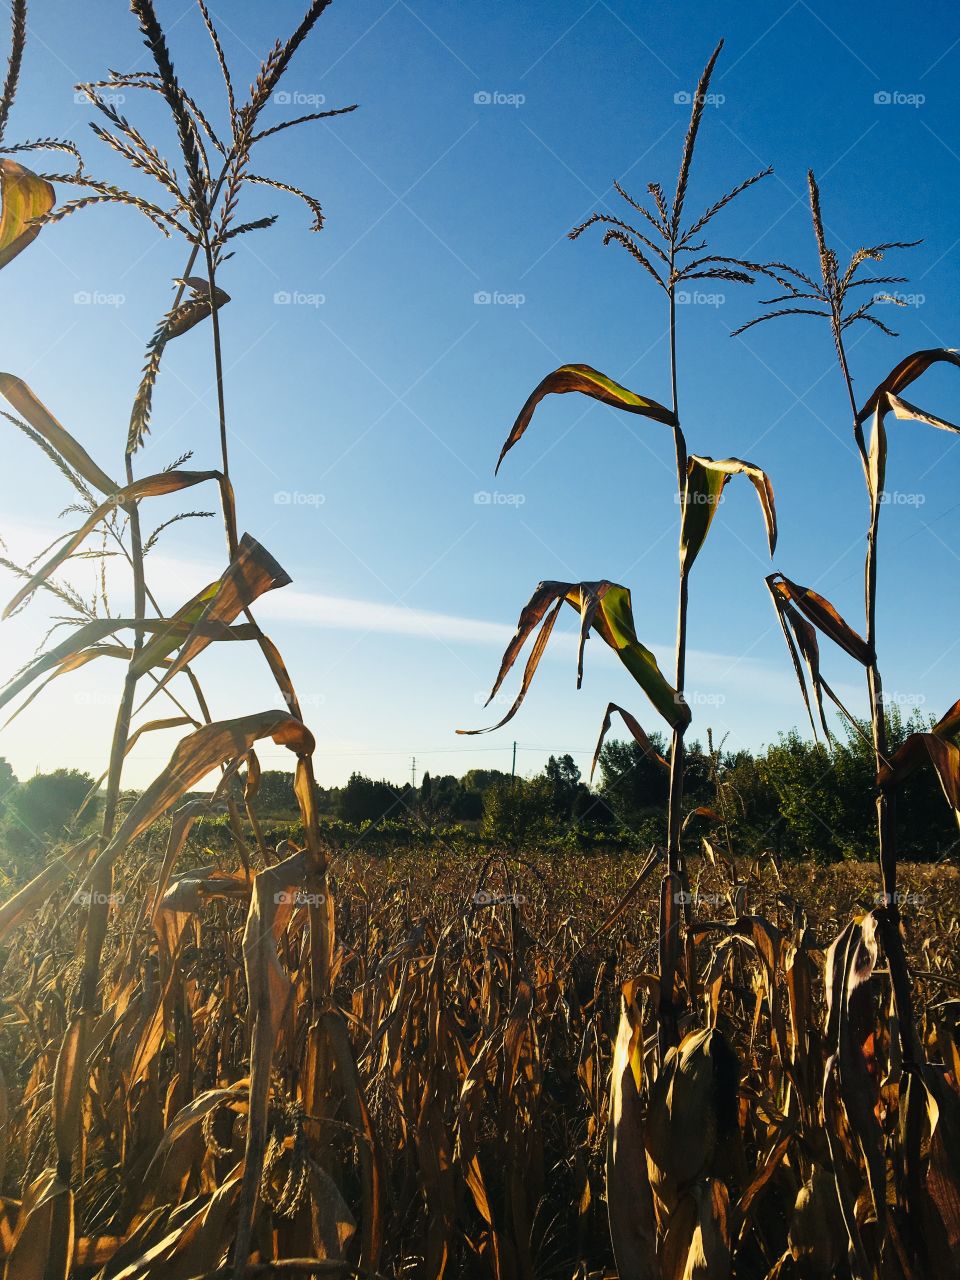 End of the season corn field in Portugal 